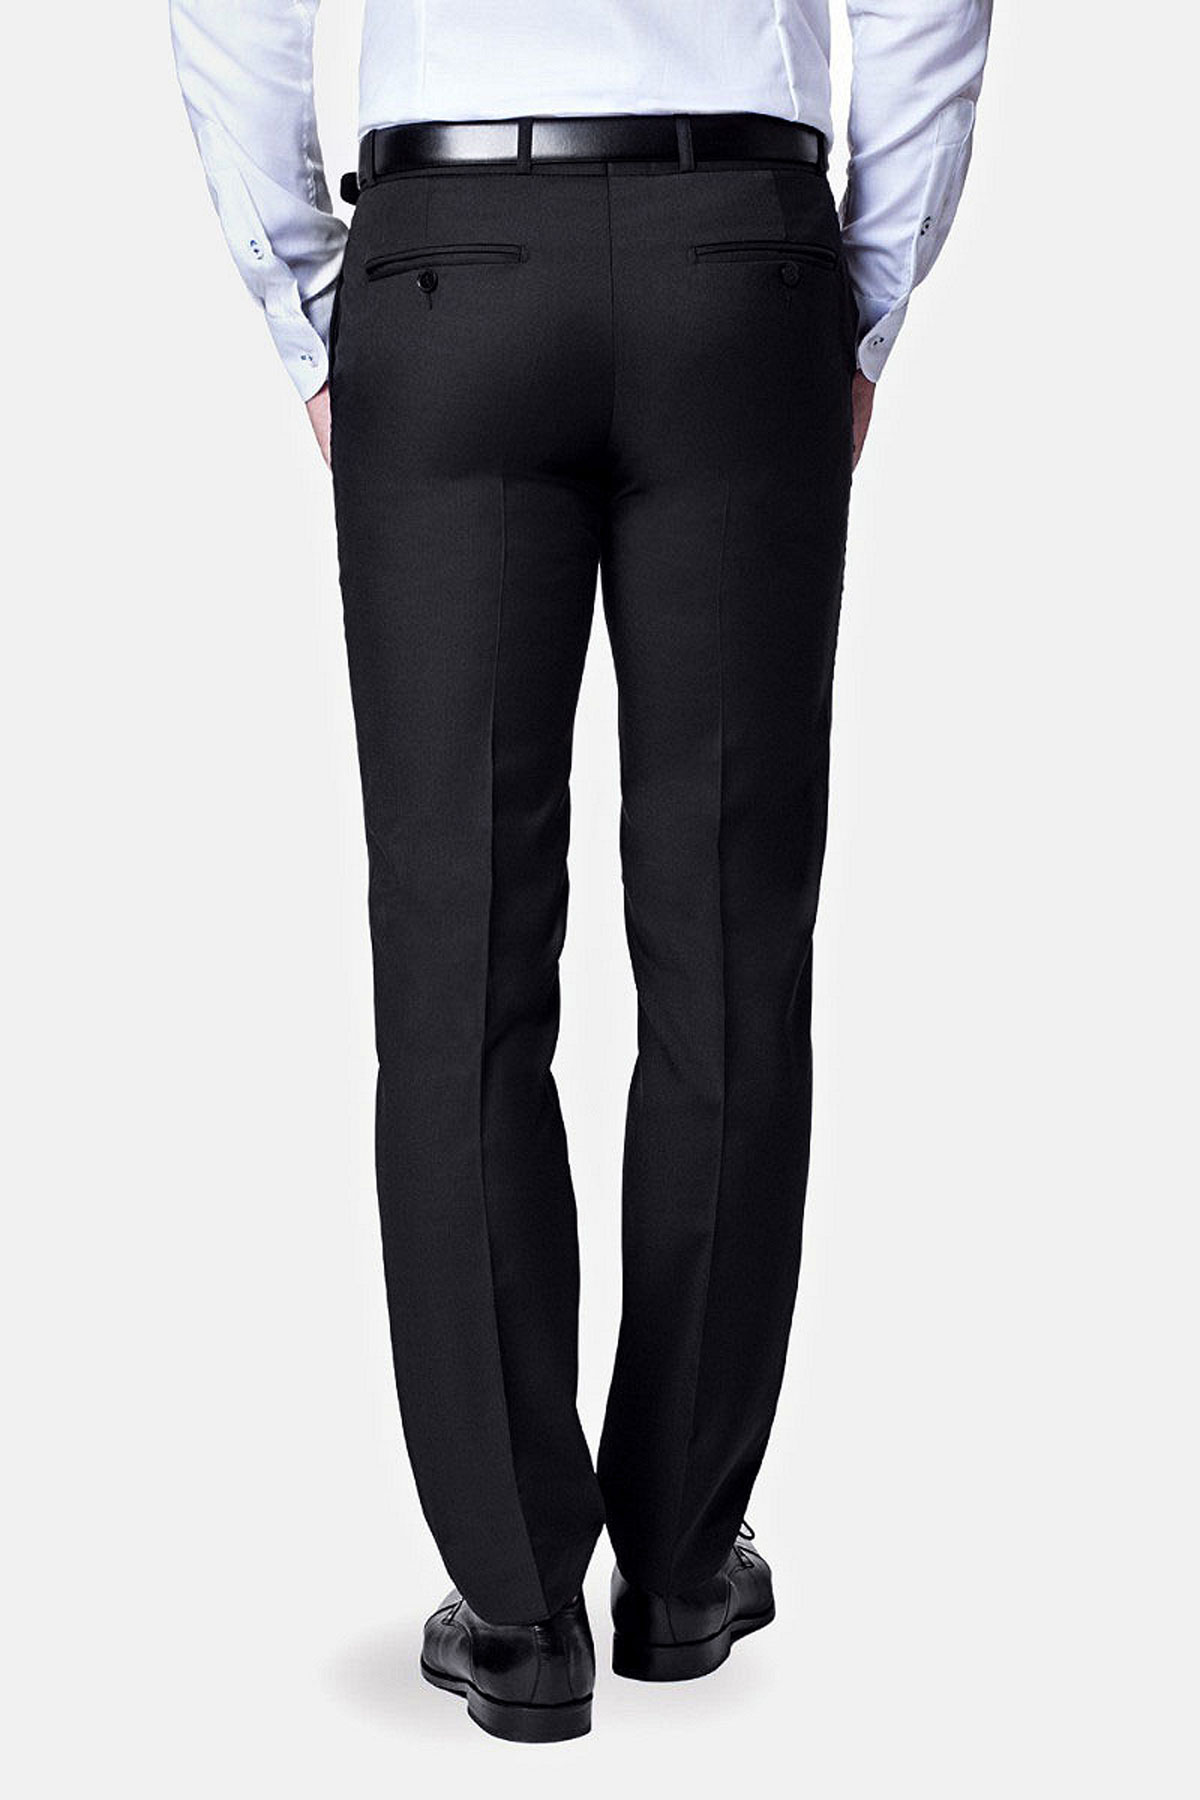 Orsay Spodnie garniturowe jasnoszary Melan\u017cowy W stylu casual Moda Garnitury Spodnie garniturowe 